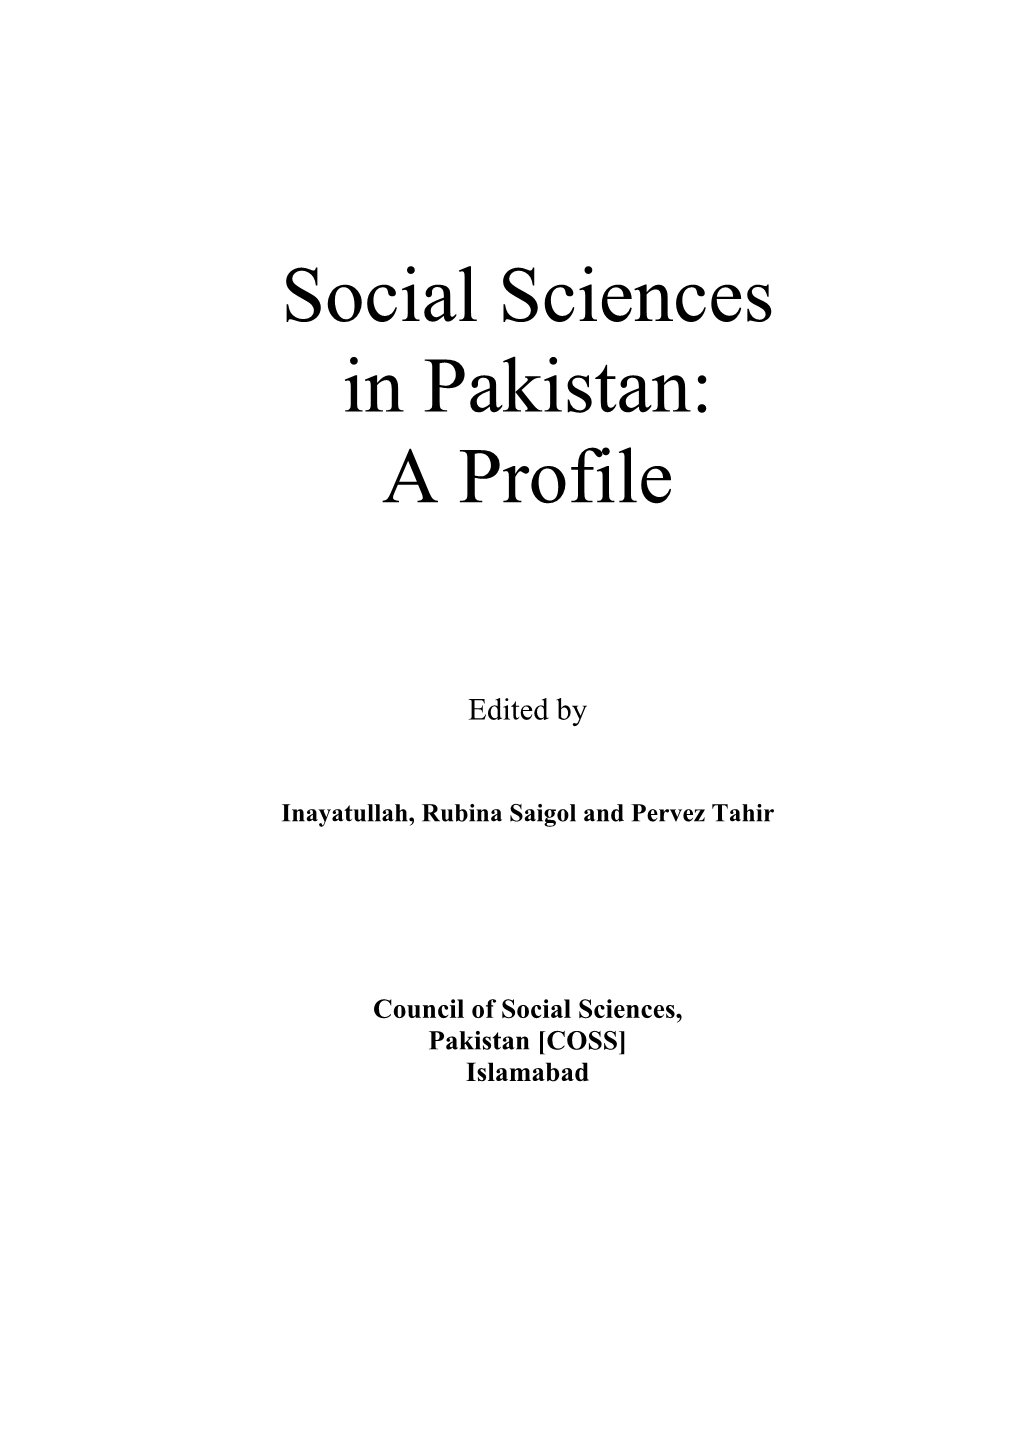 Social Sciences in Pakistan: a Profile